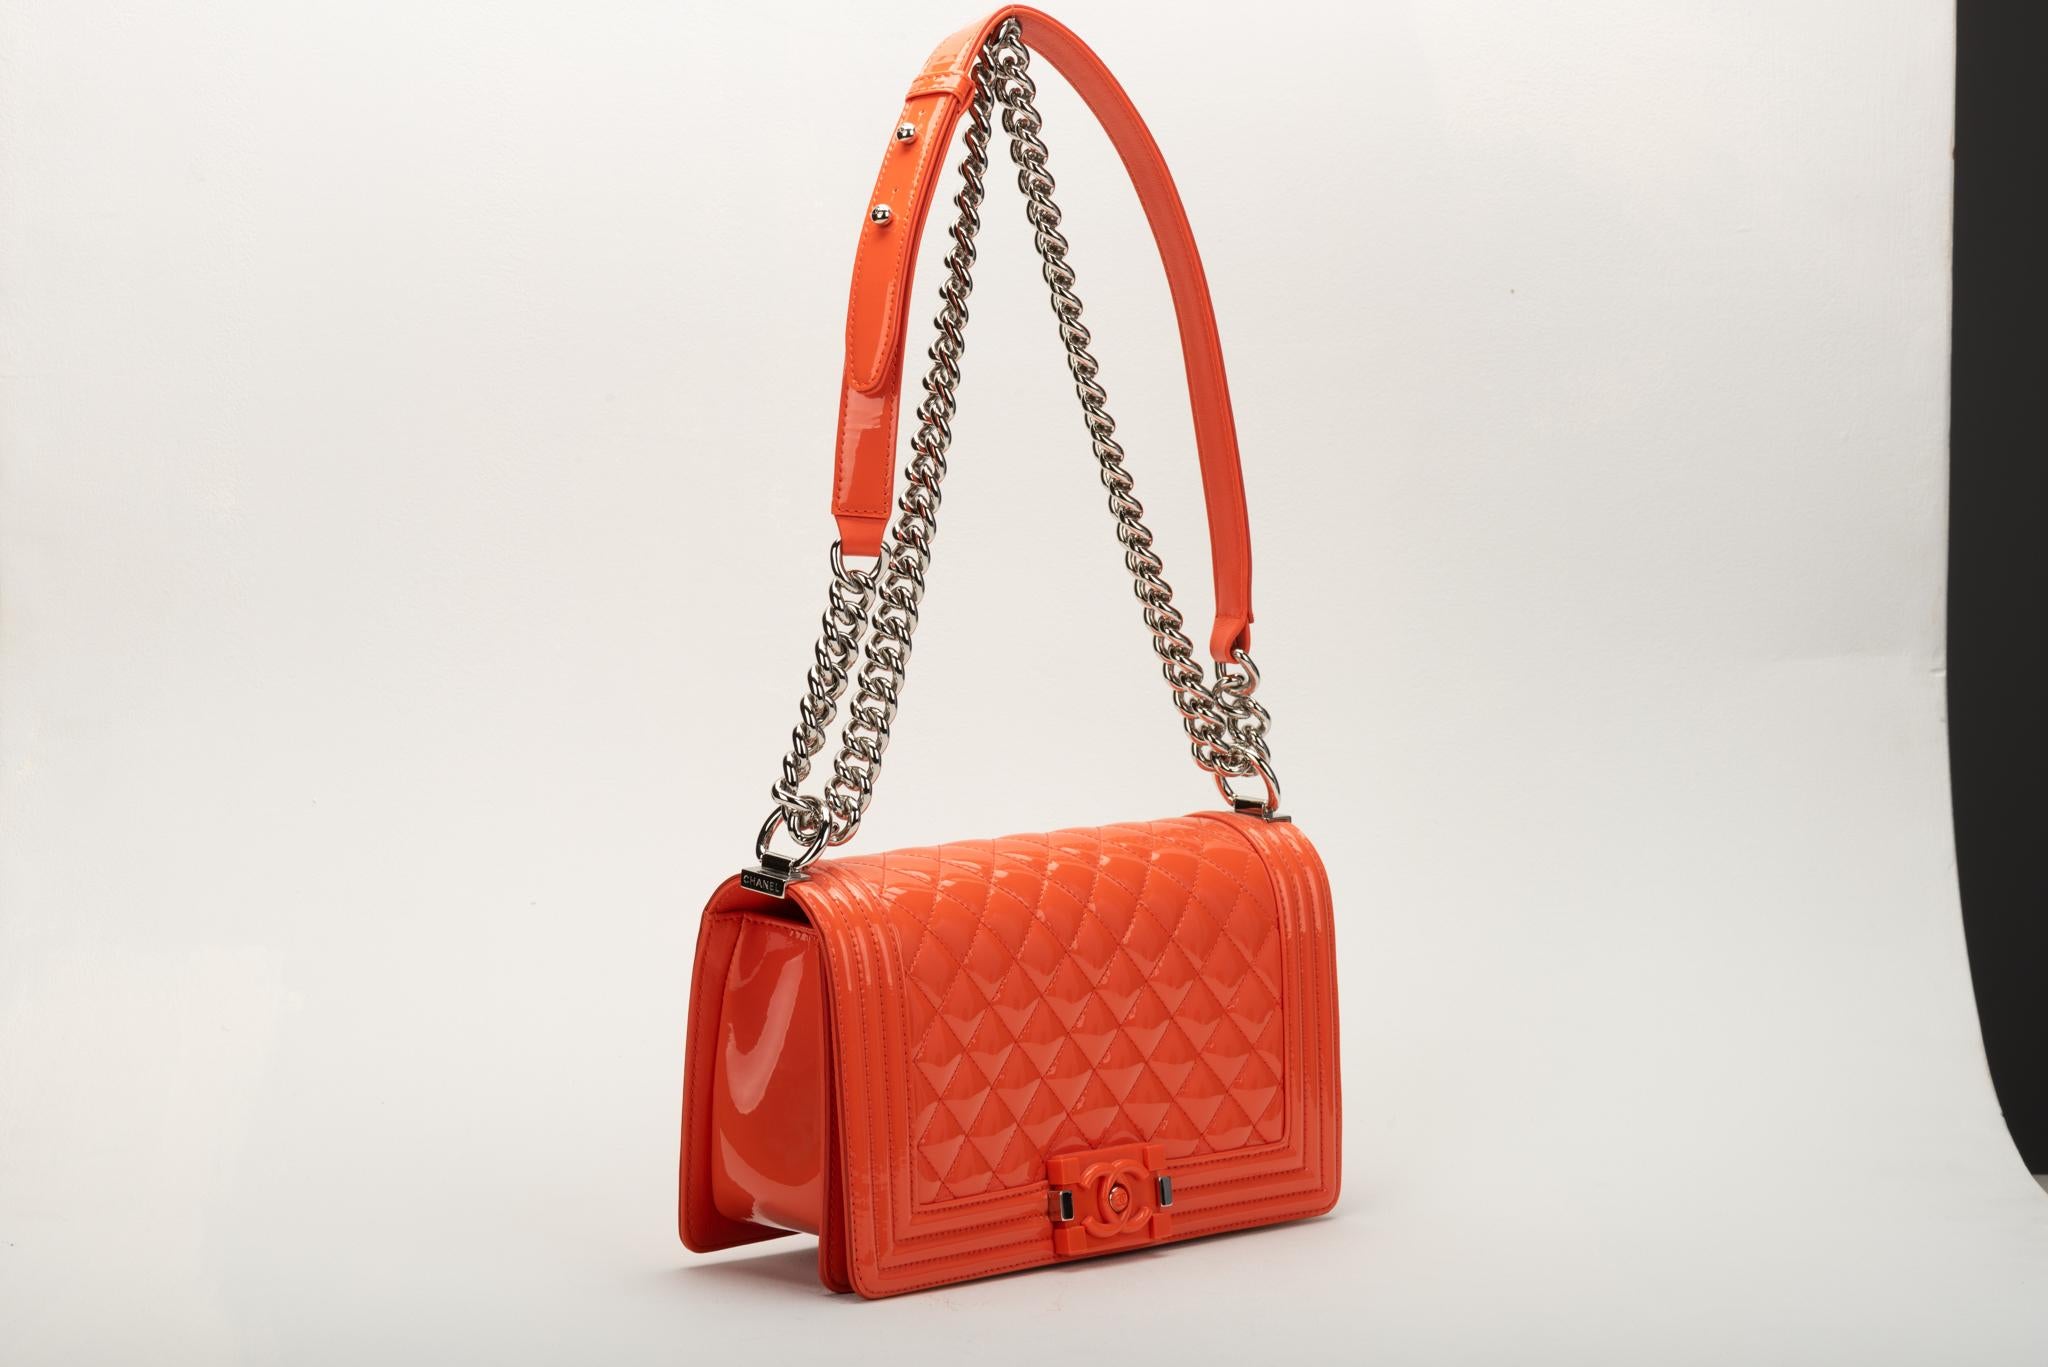 Chanel medium boy bag in orange patent leather , orange lambskin lining and silver tone hardware. Shoulder drop 11